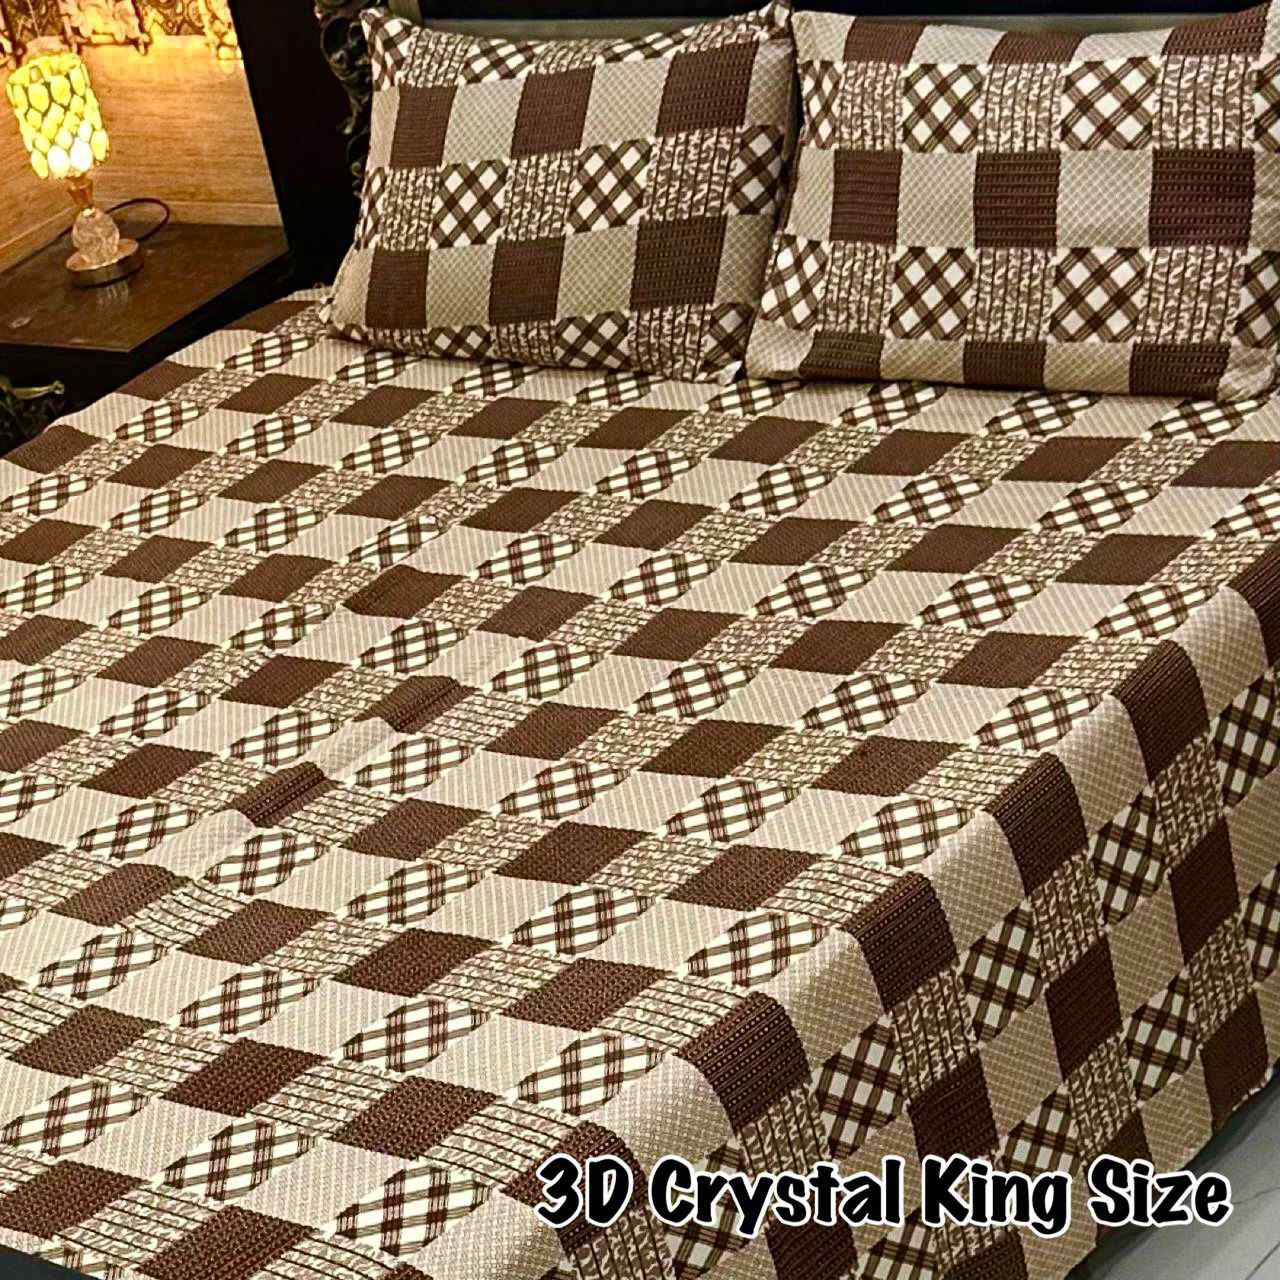 DF-CBSKS-7: DFY Bedding 3D Crystal Bed Sheet King Size